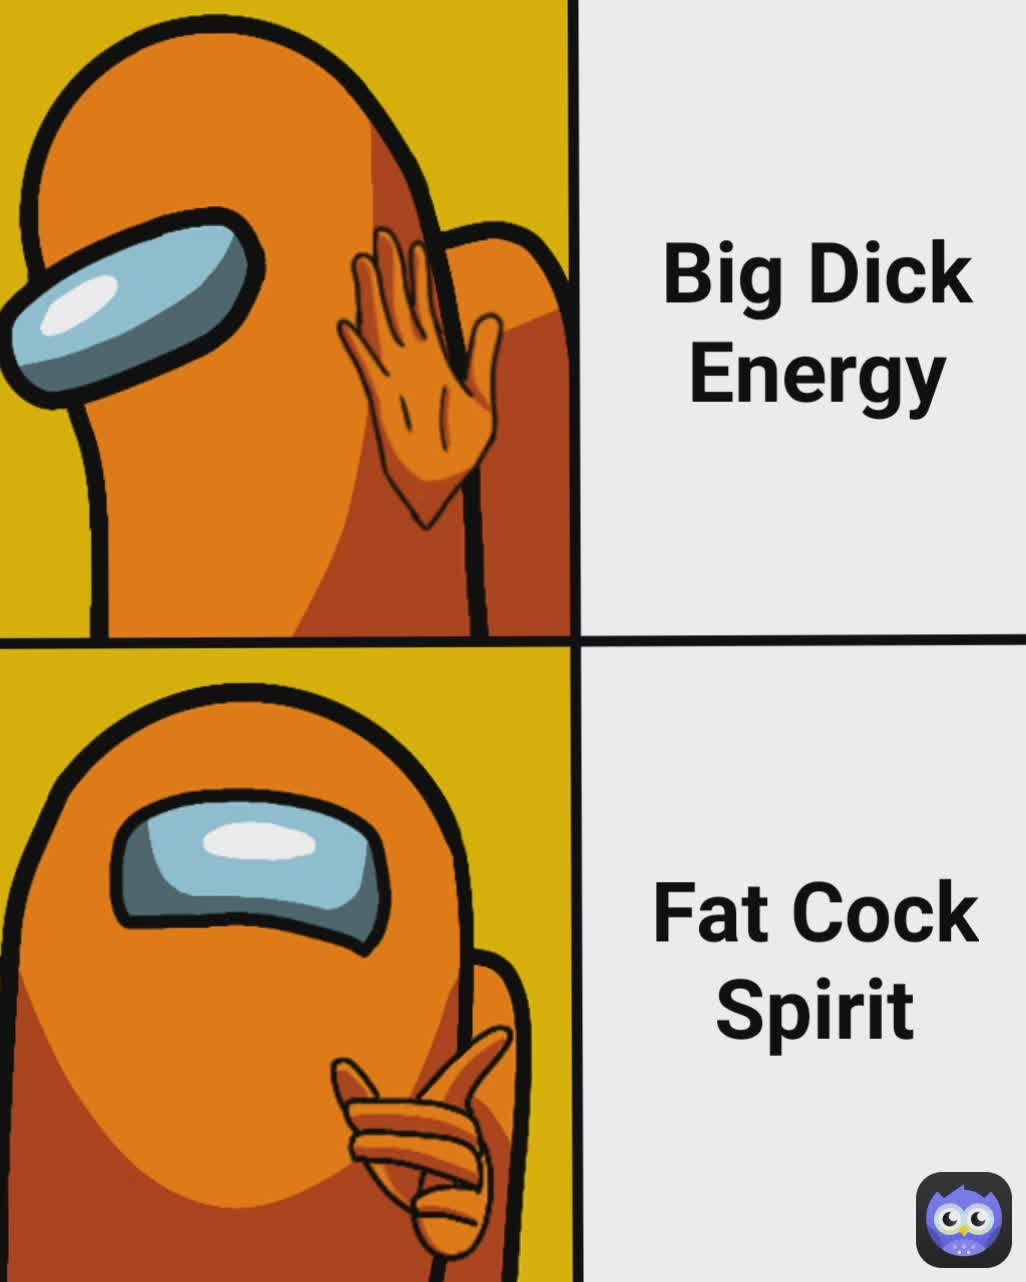 Big Dick Energy Big Dick Energy Fat Cock Spirit Fat Cock Spirit Big Dick Energy